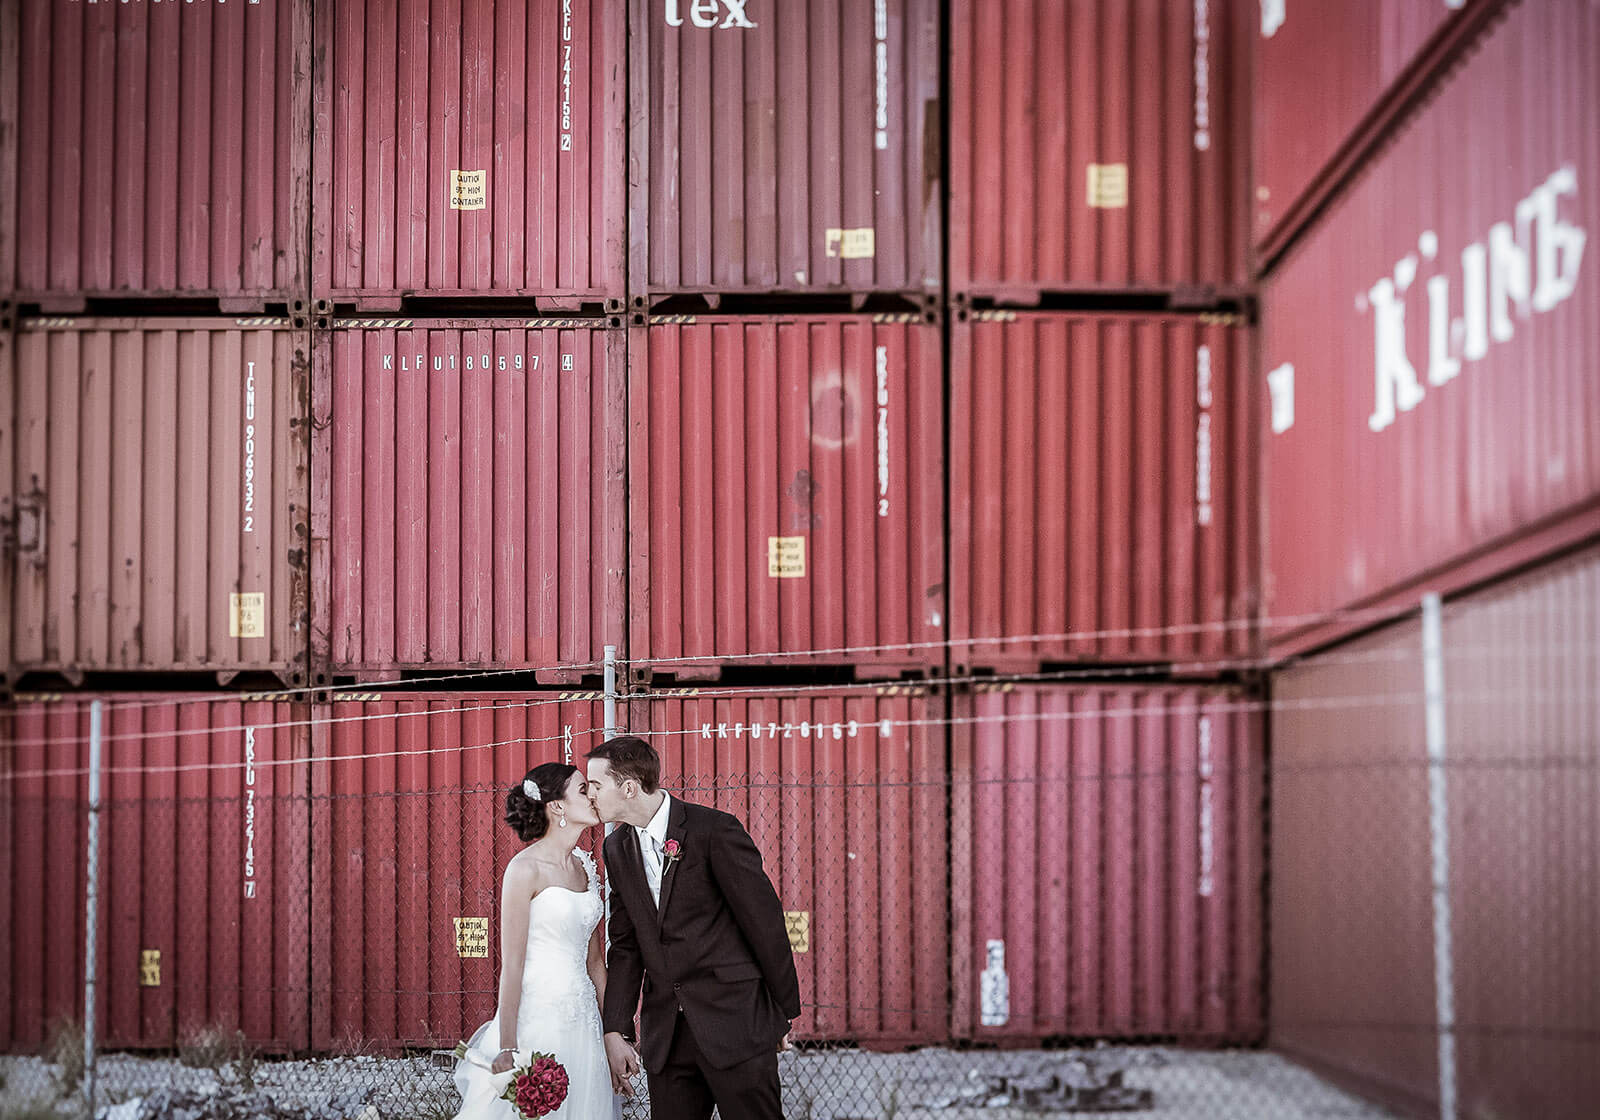 Port Beach, Fremantle Wedding Photography by Peter Adams-Shawn